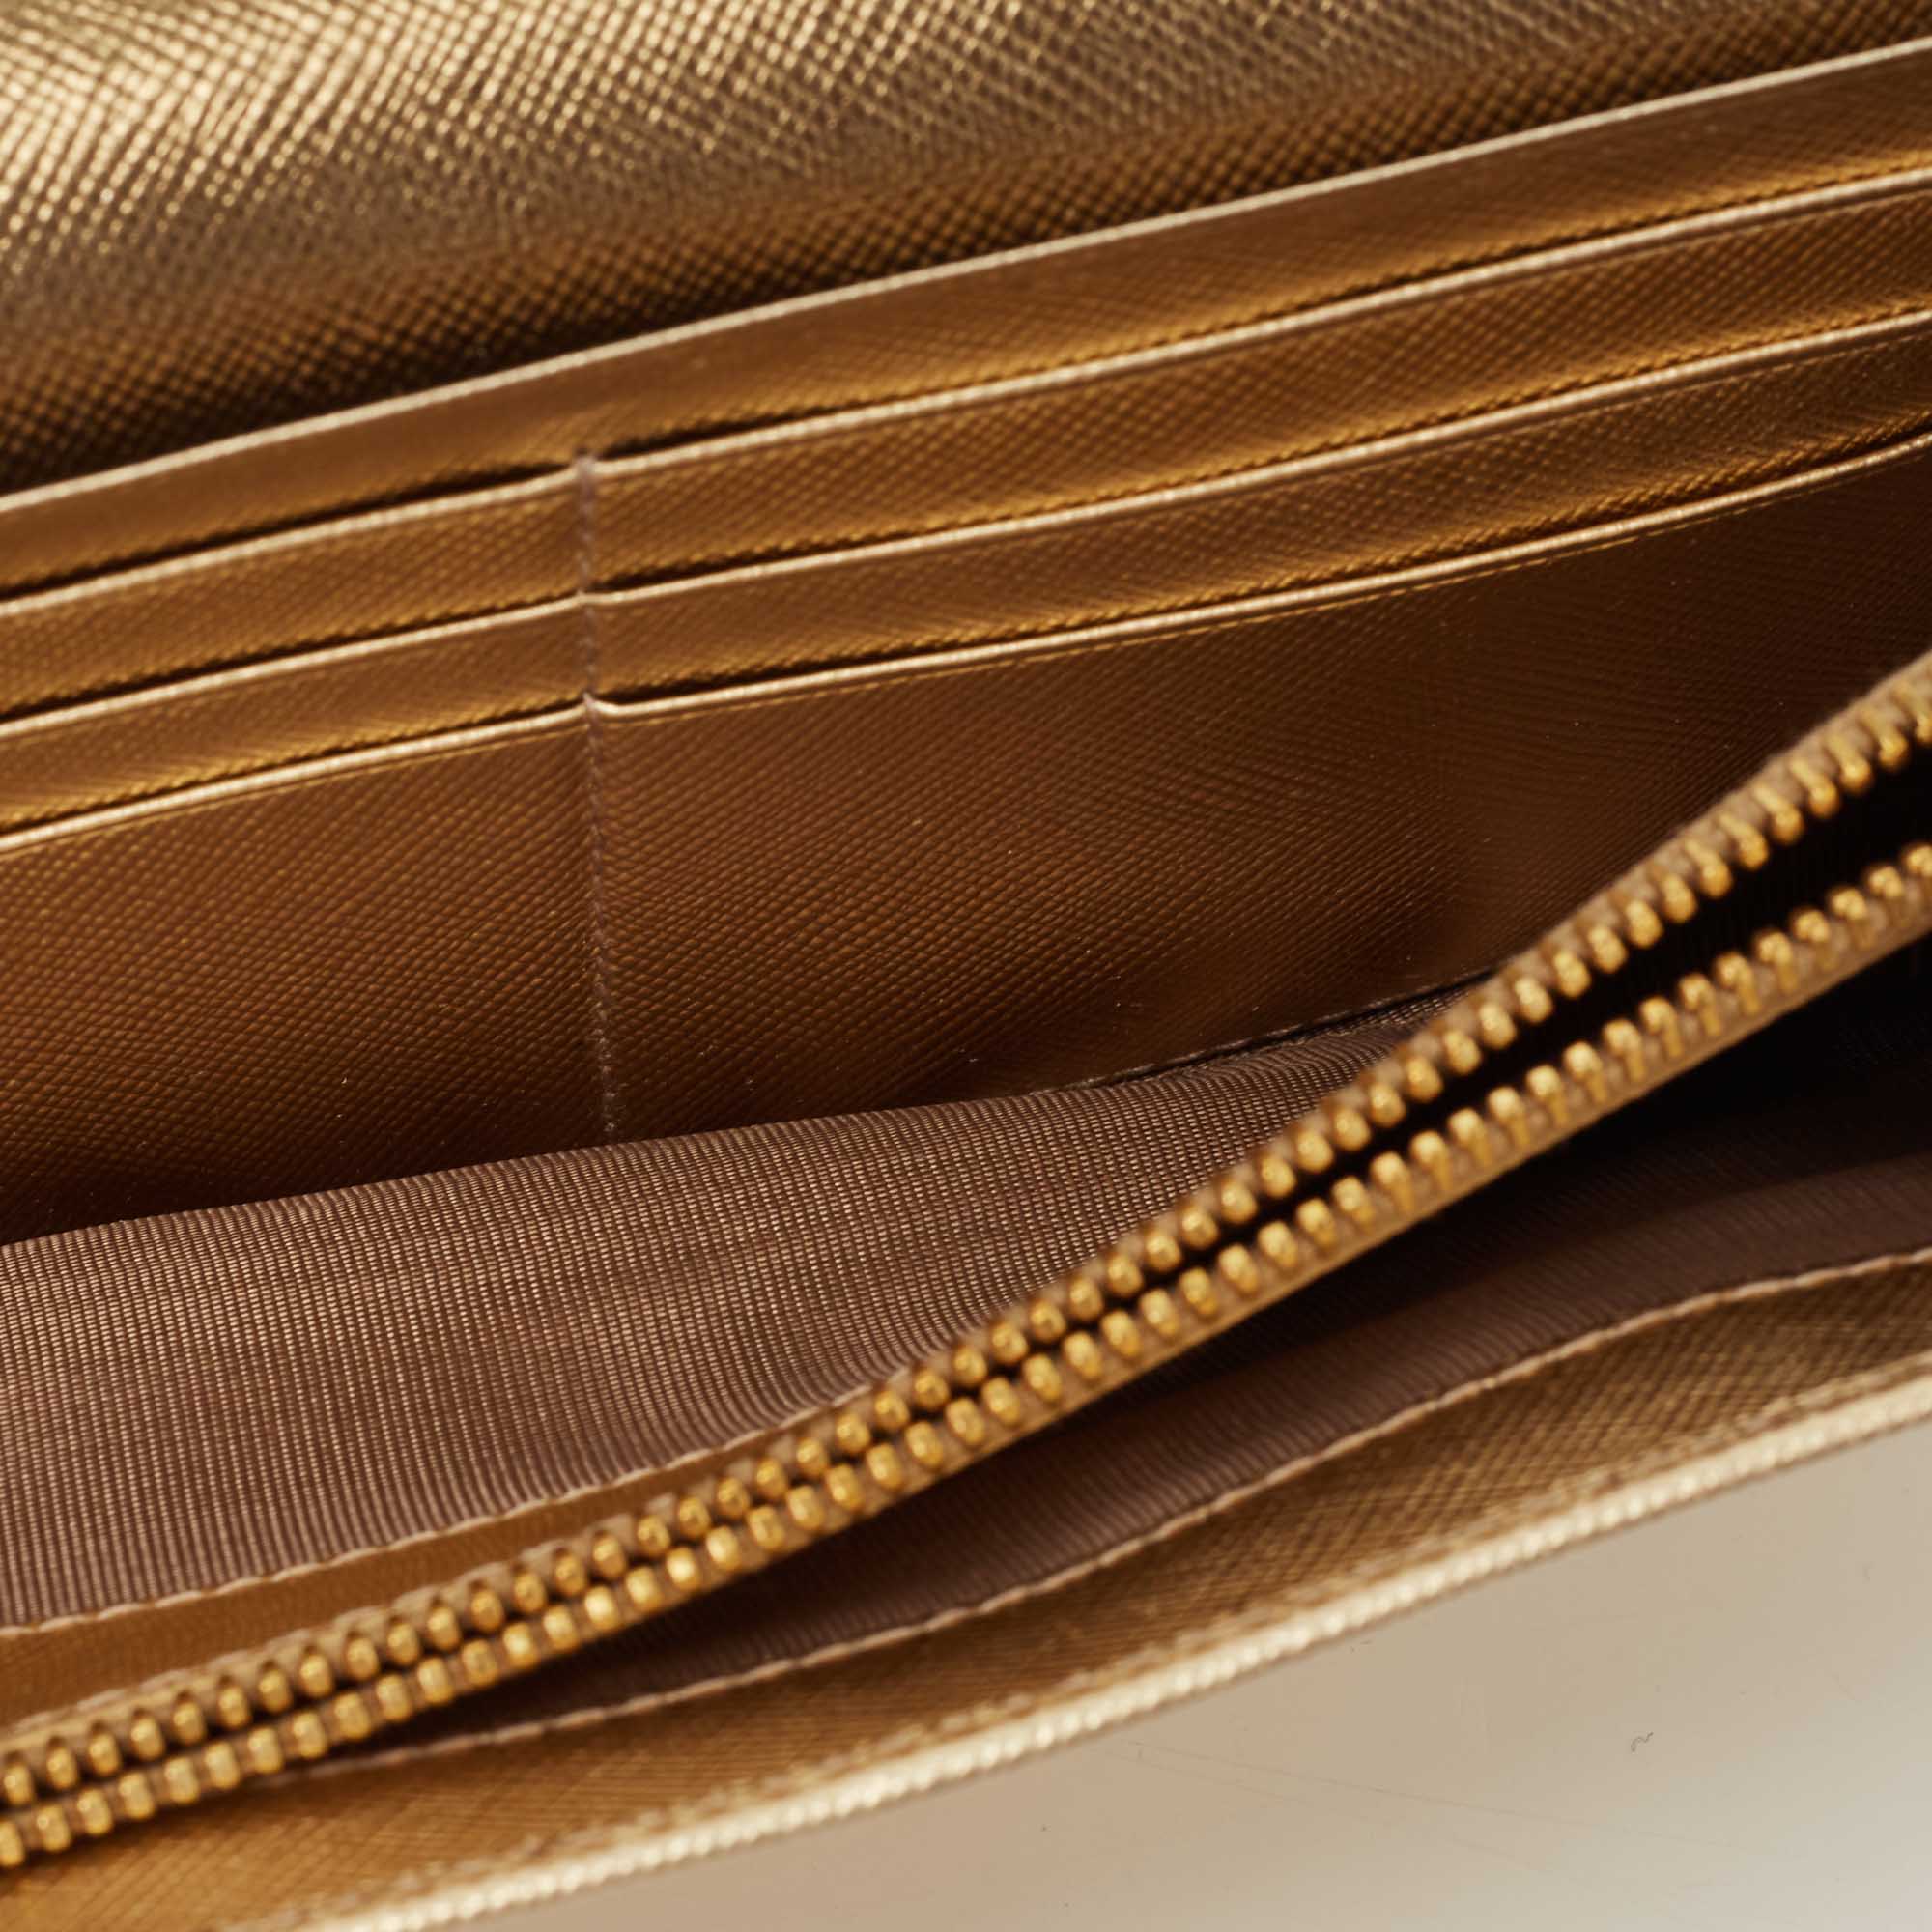 Prada Gold Saffiano Leather Pushlock Flap Wallet